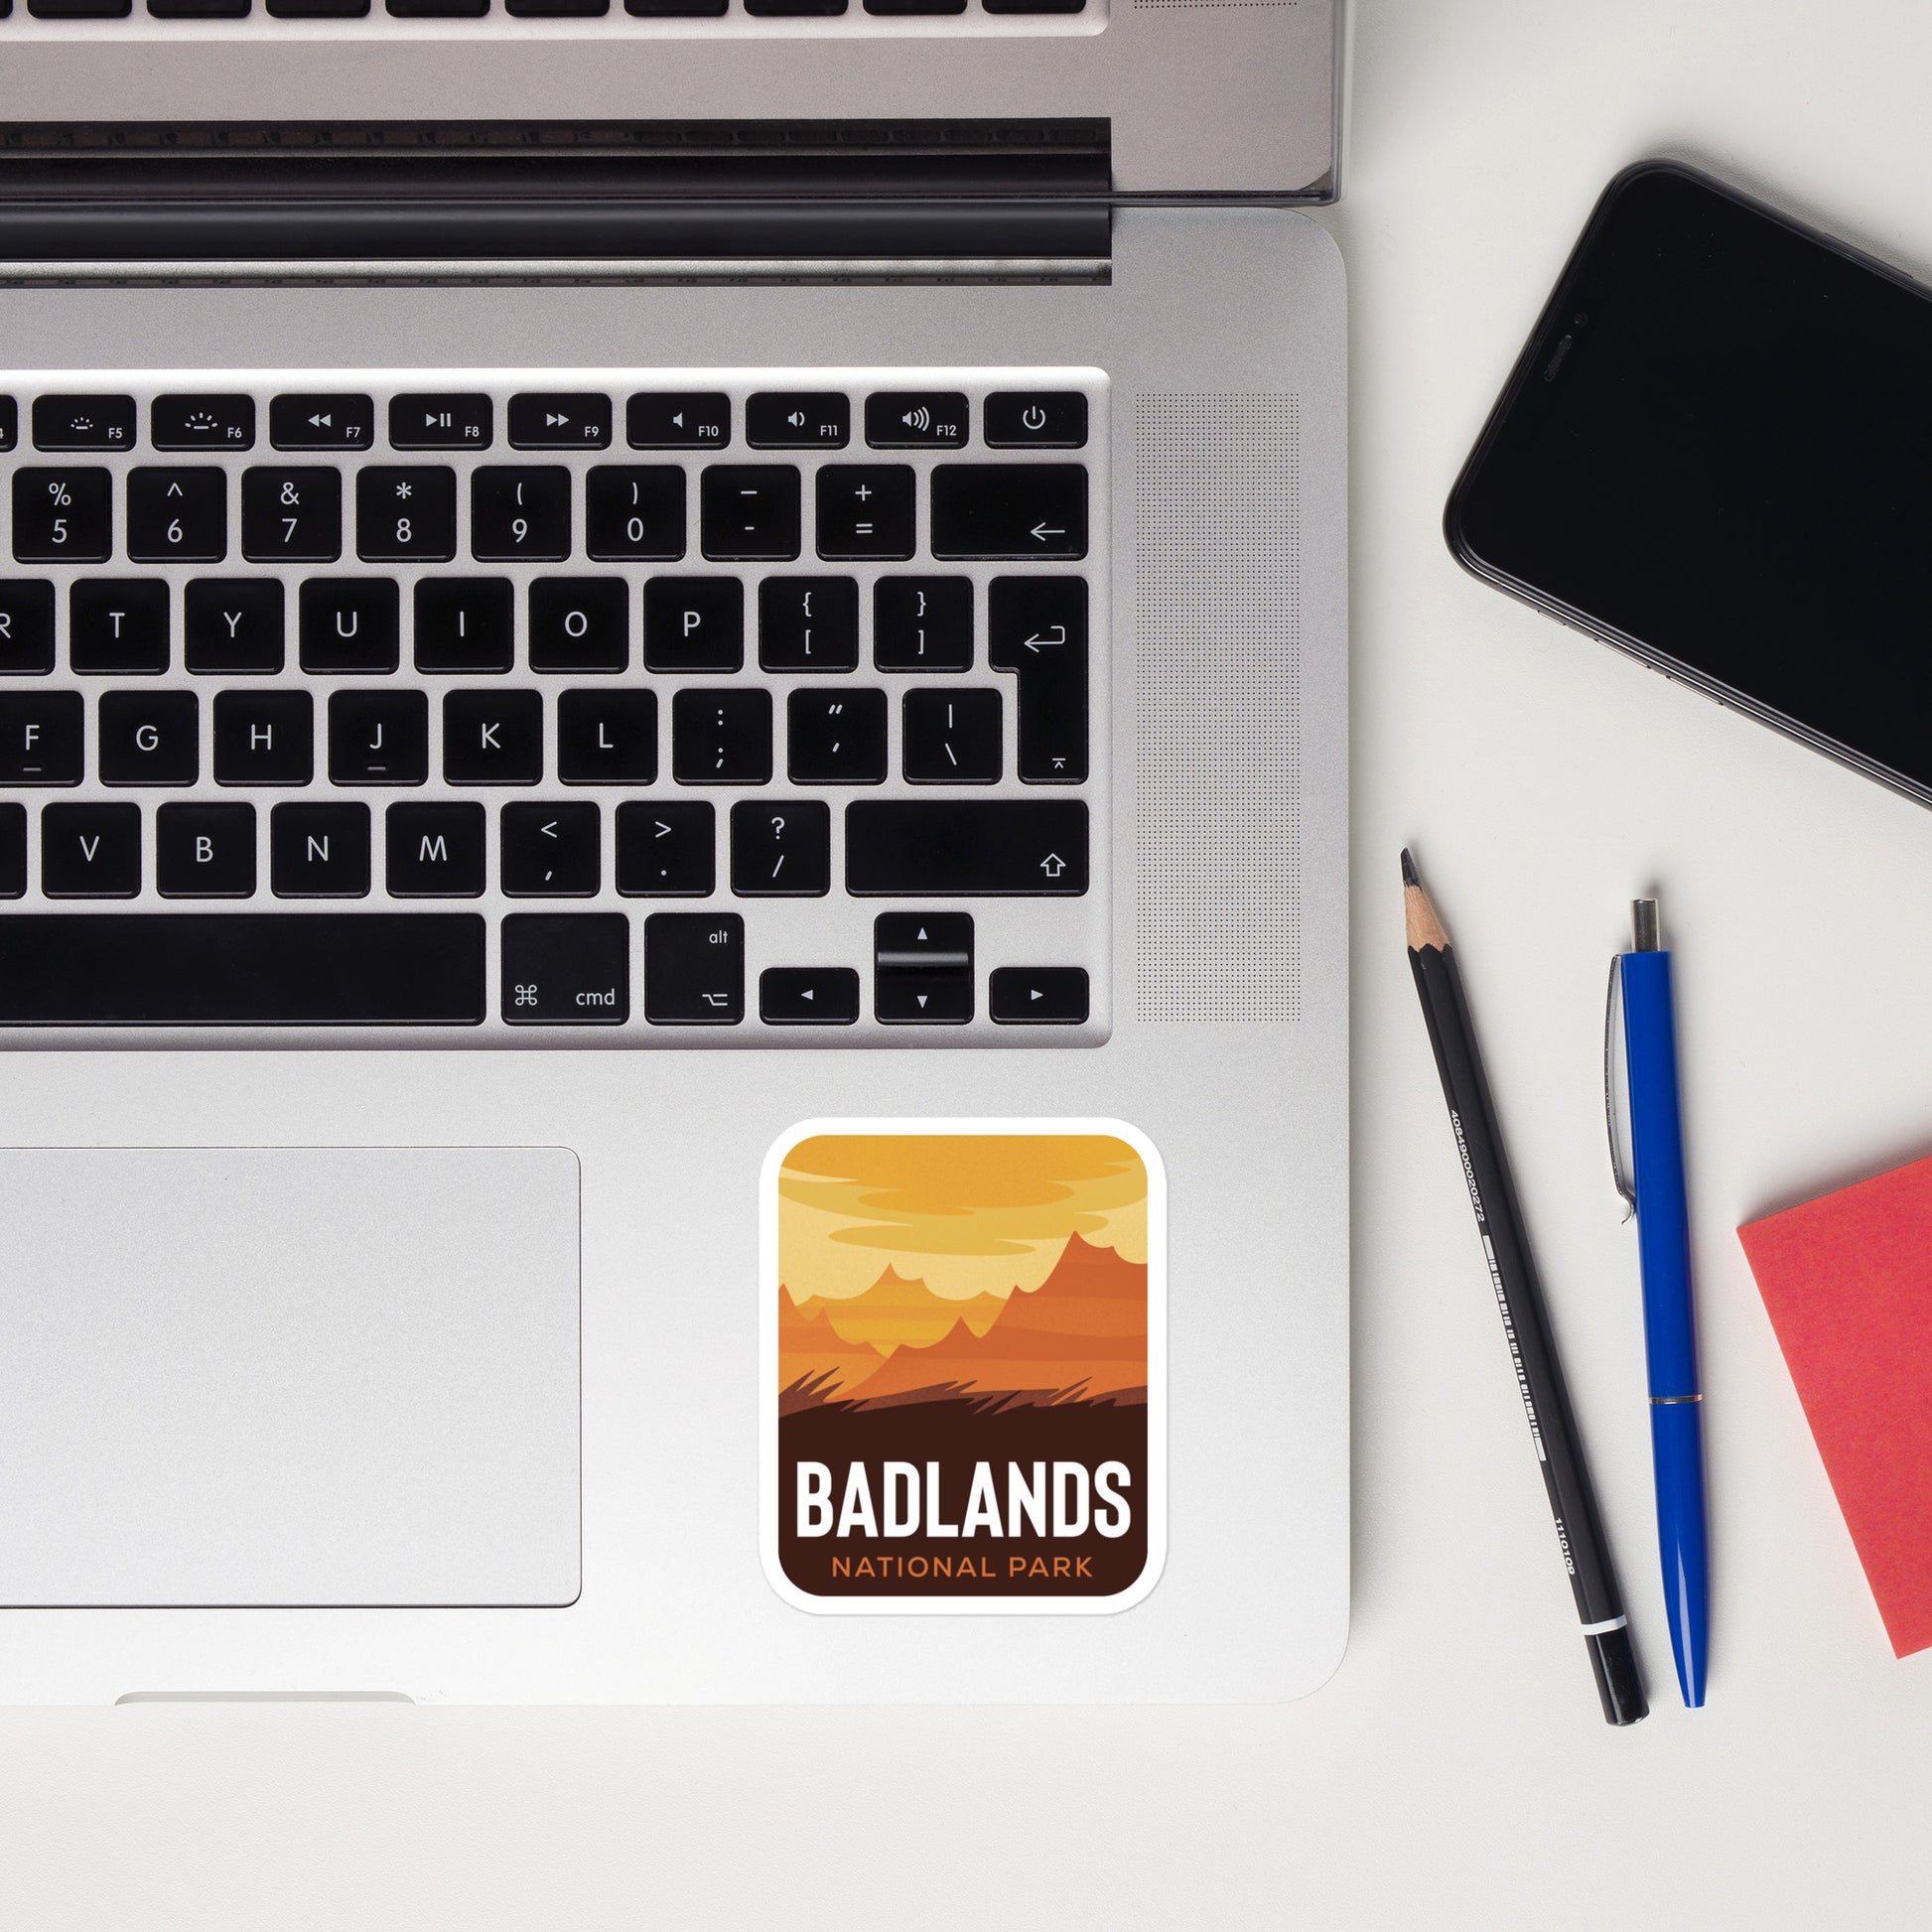 A sticker of Badlands National Park on a laptop